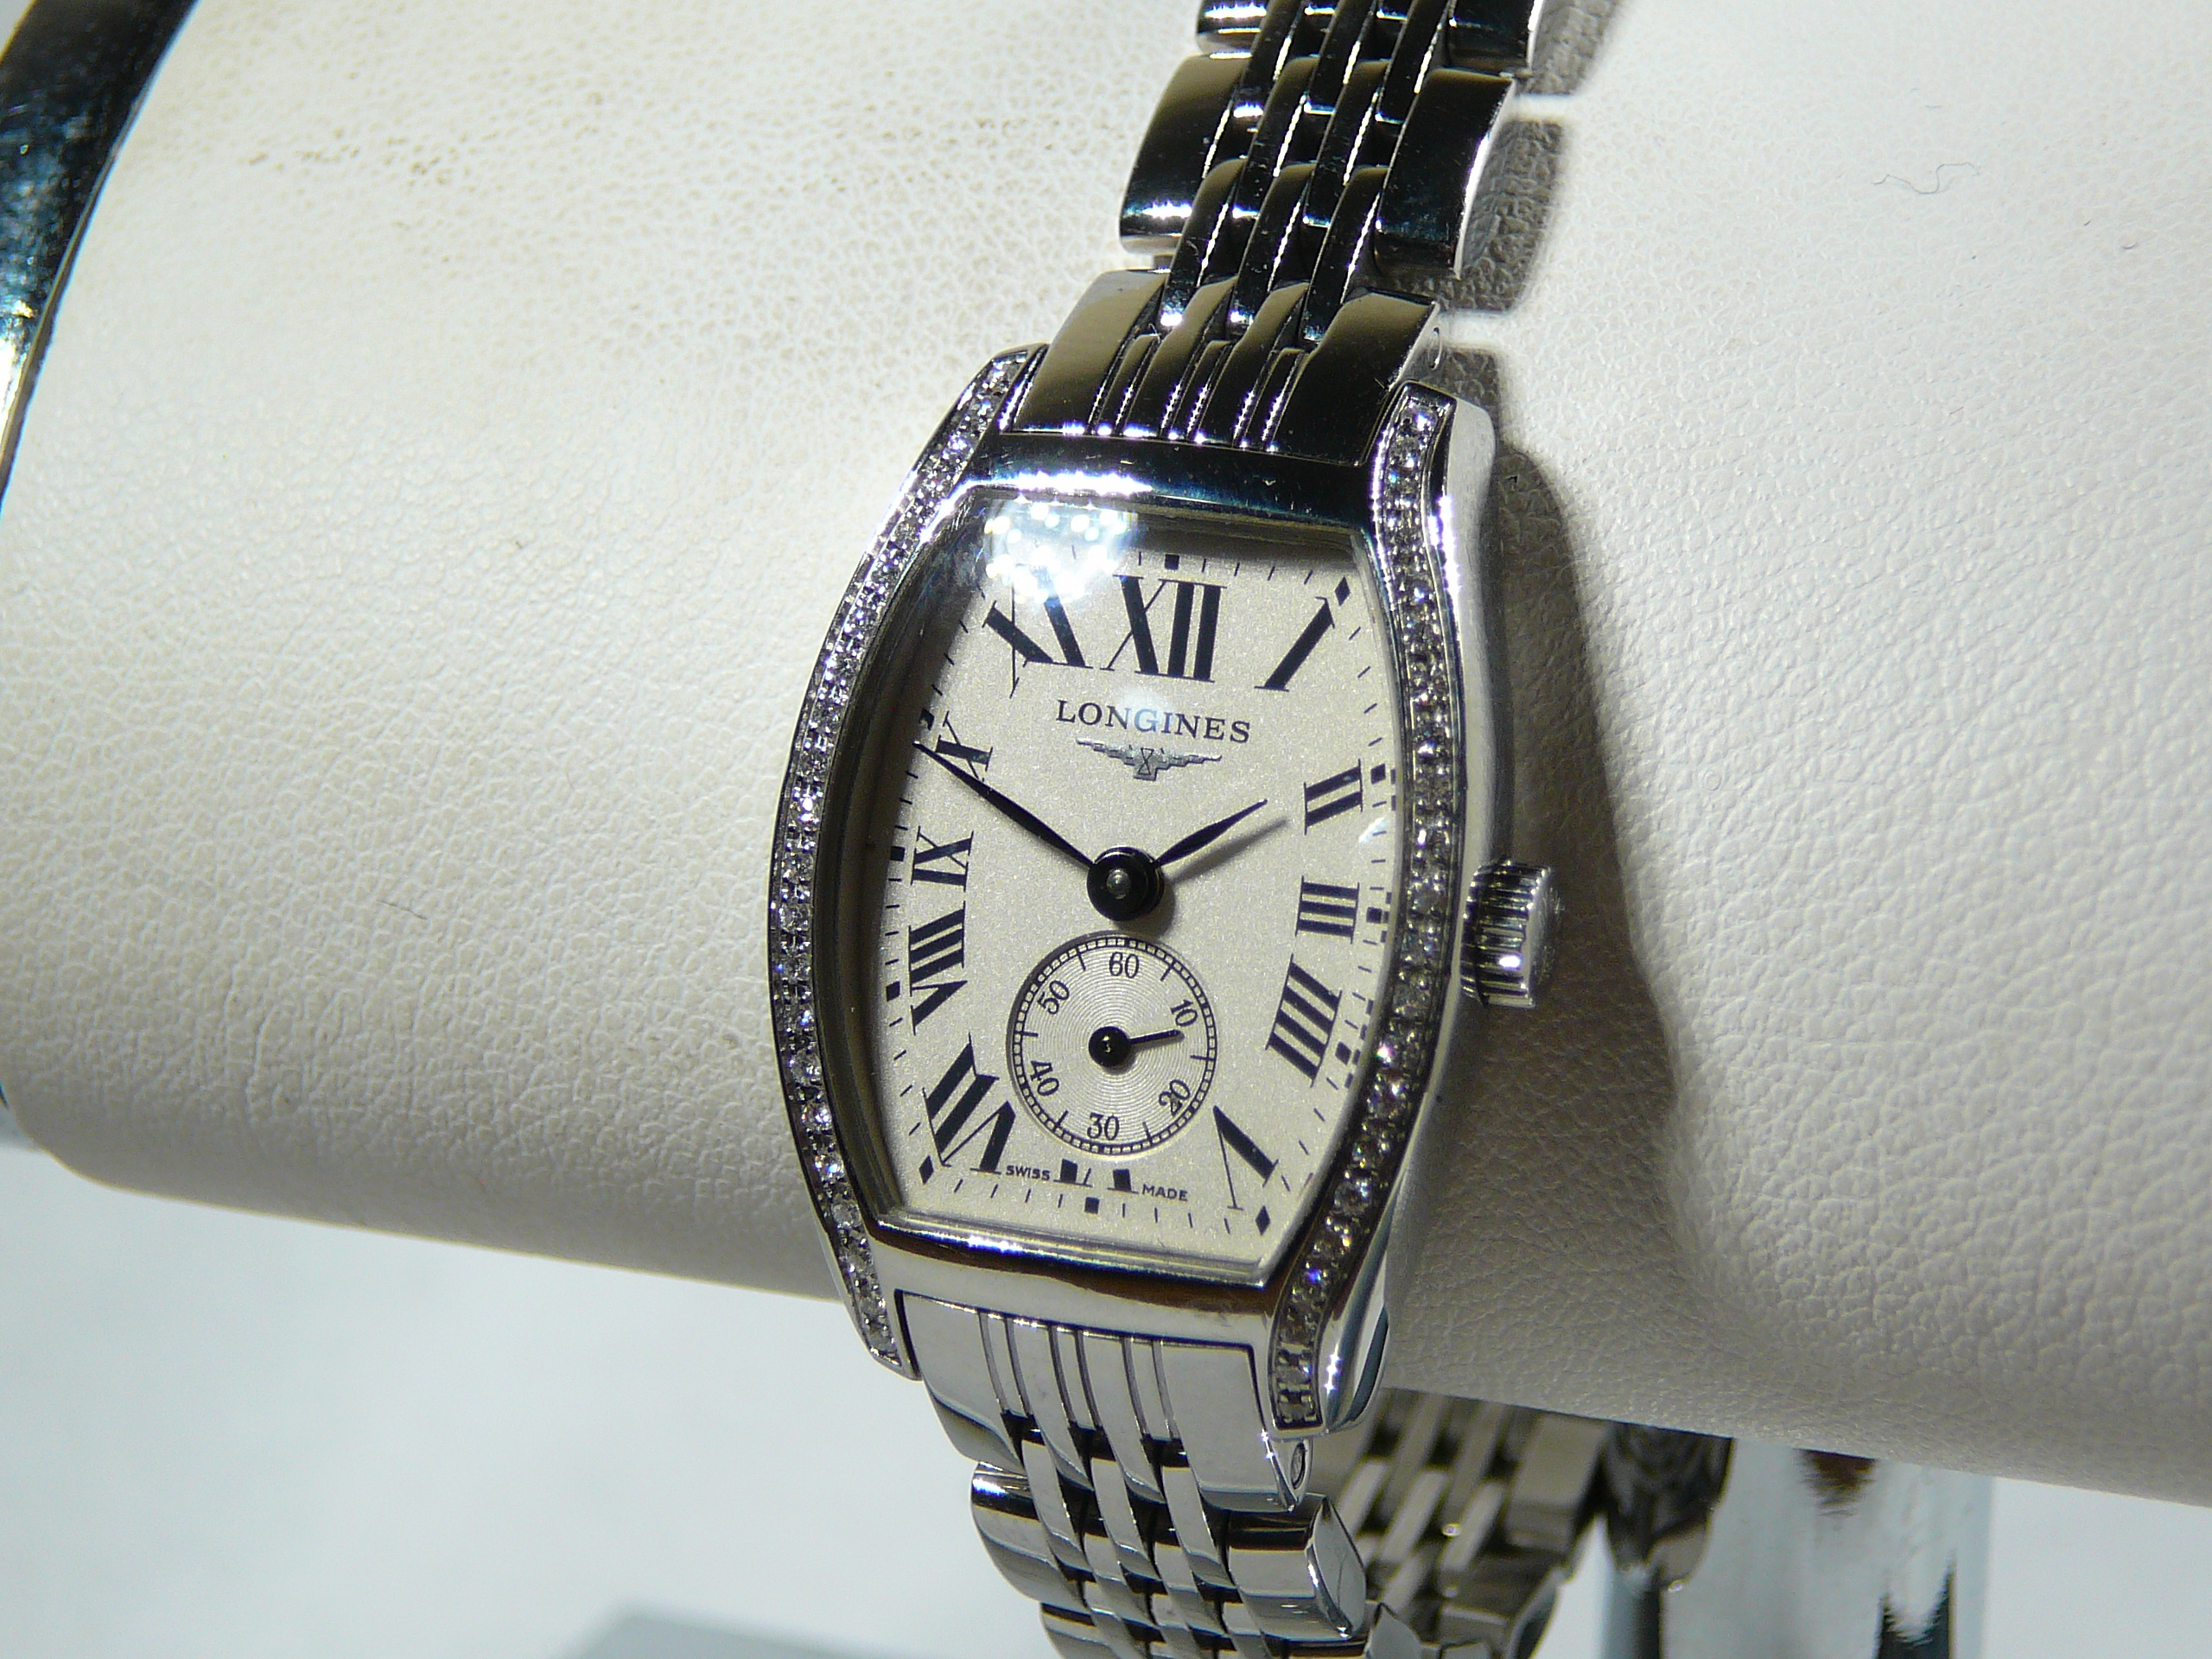 Ladies Longines Wrist Watch - Image 2 of 3